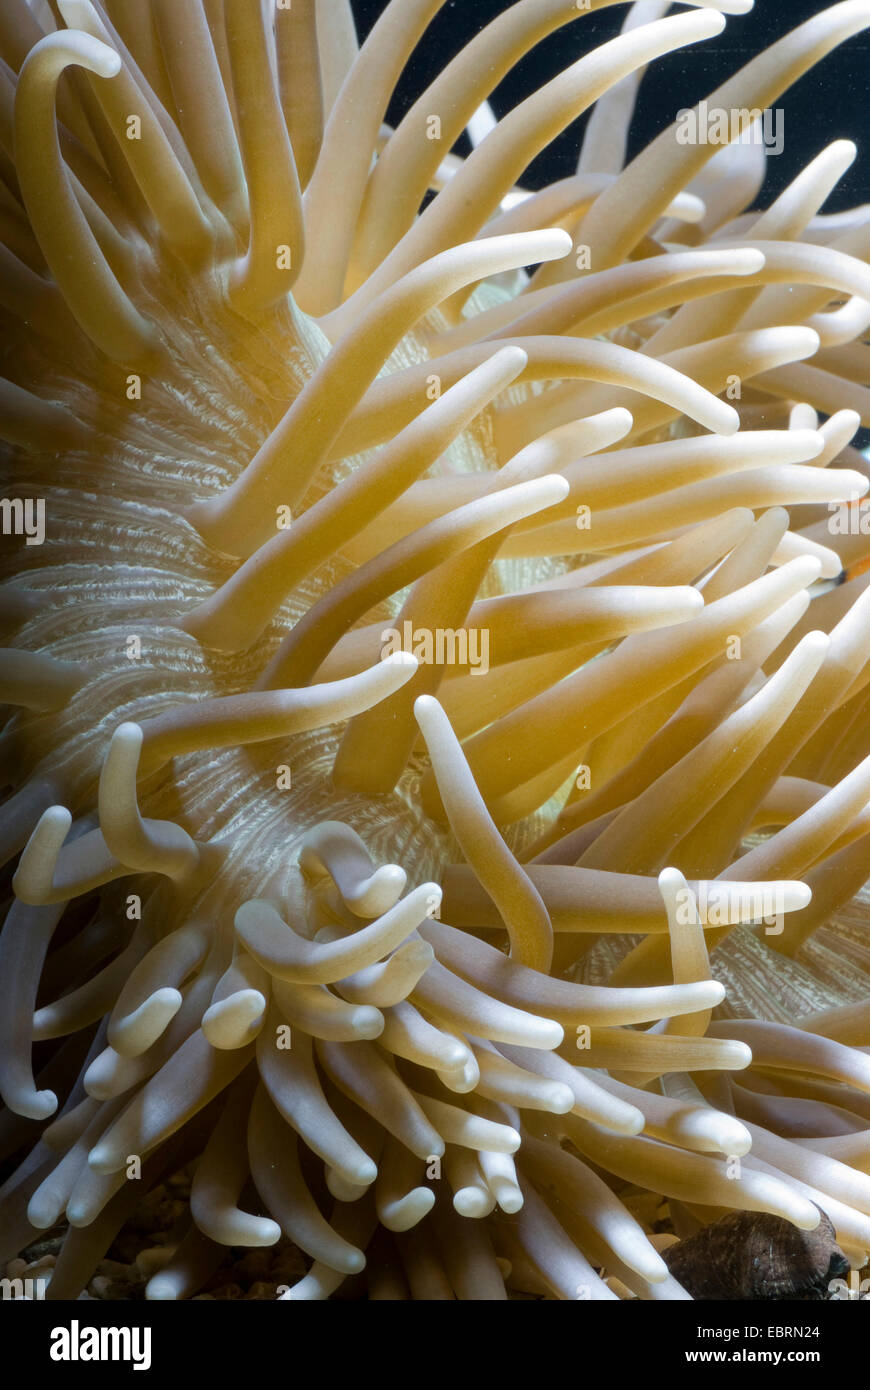 Leather anemone, Leathery sea anemone (Heteractis crispa), detail of a leathery sea anemone Stock Photo